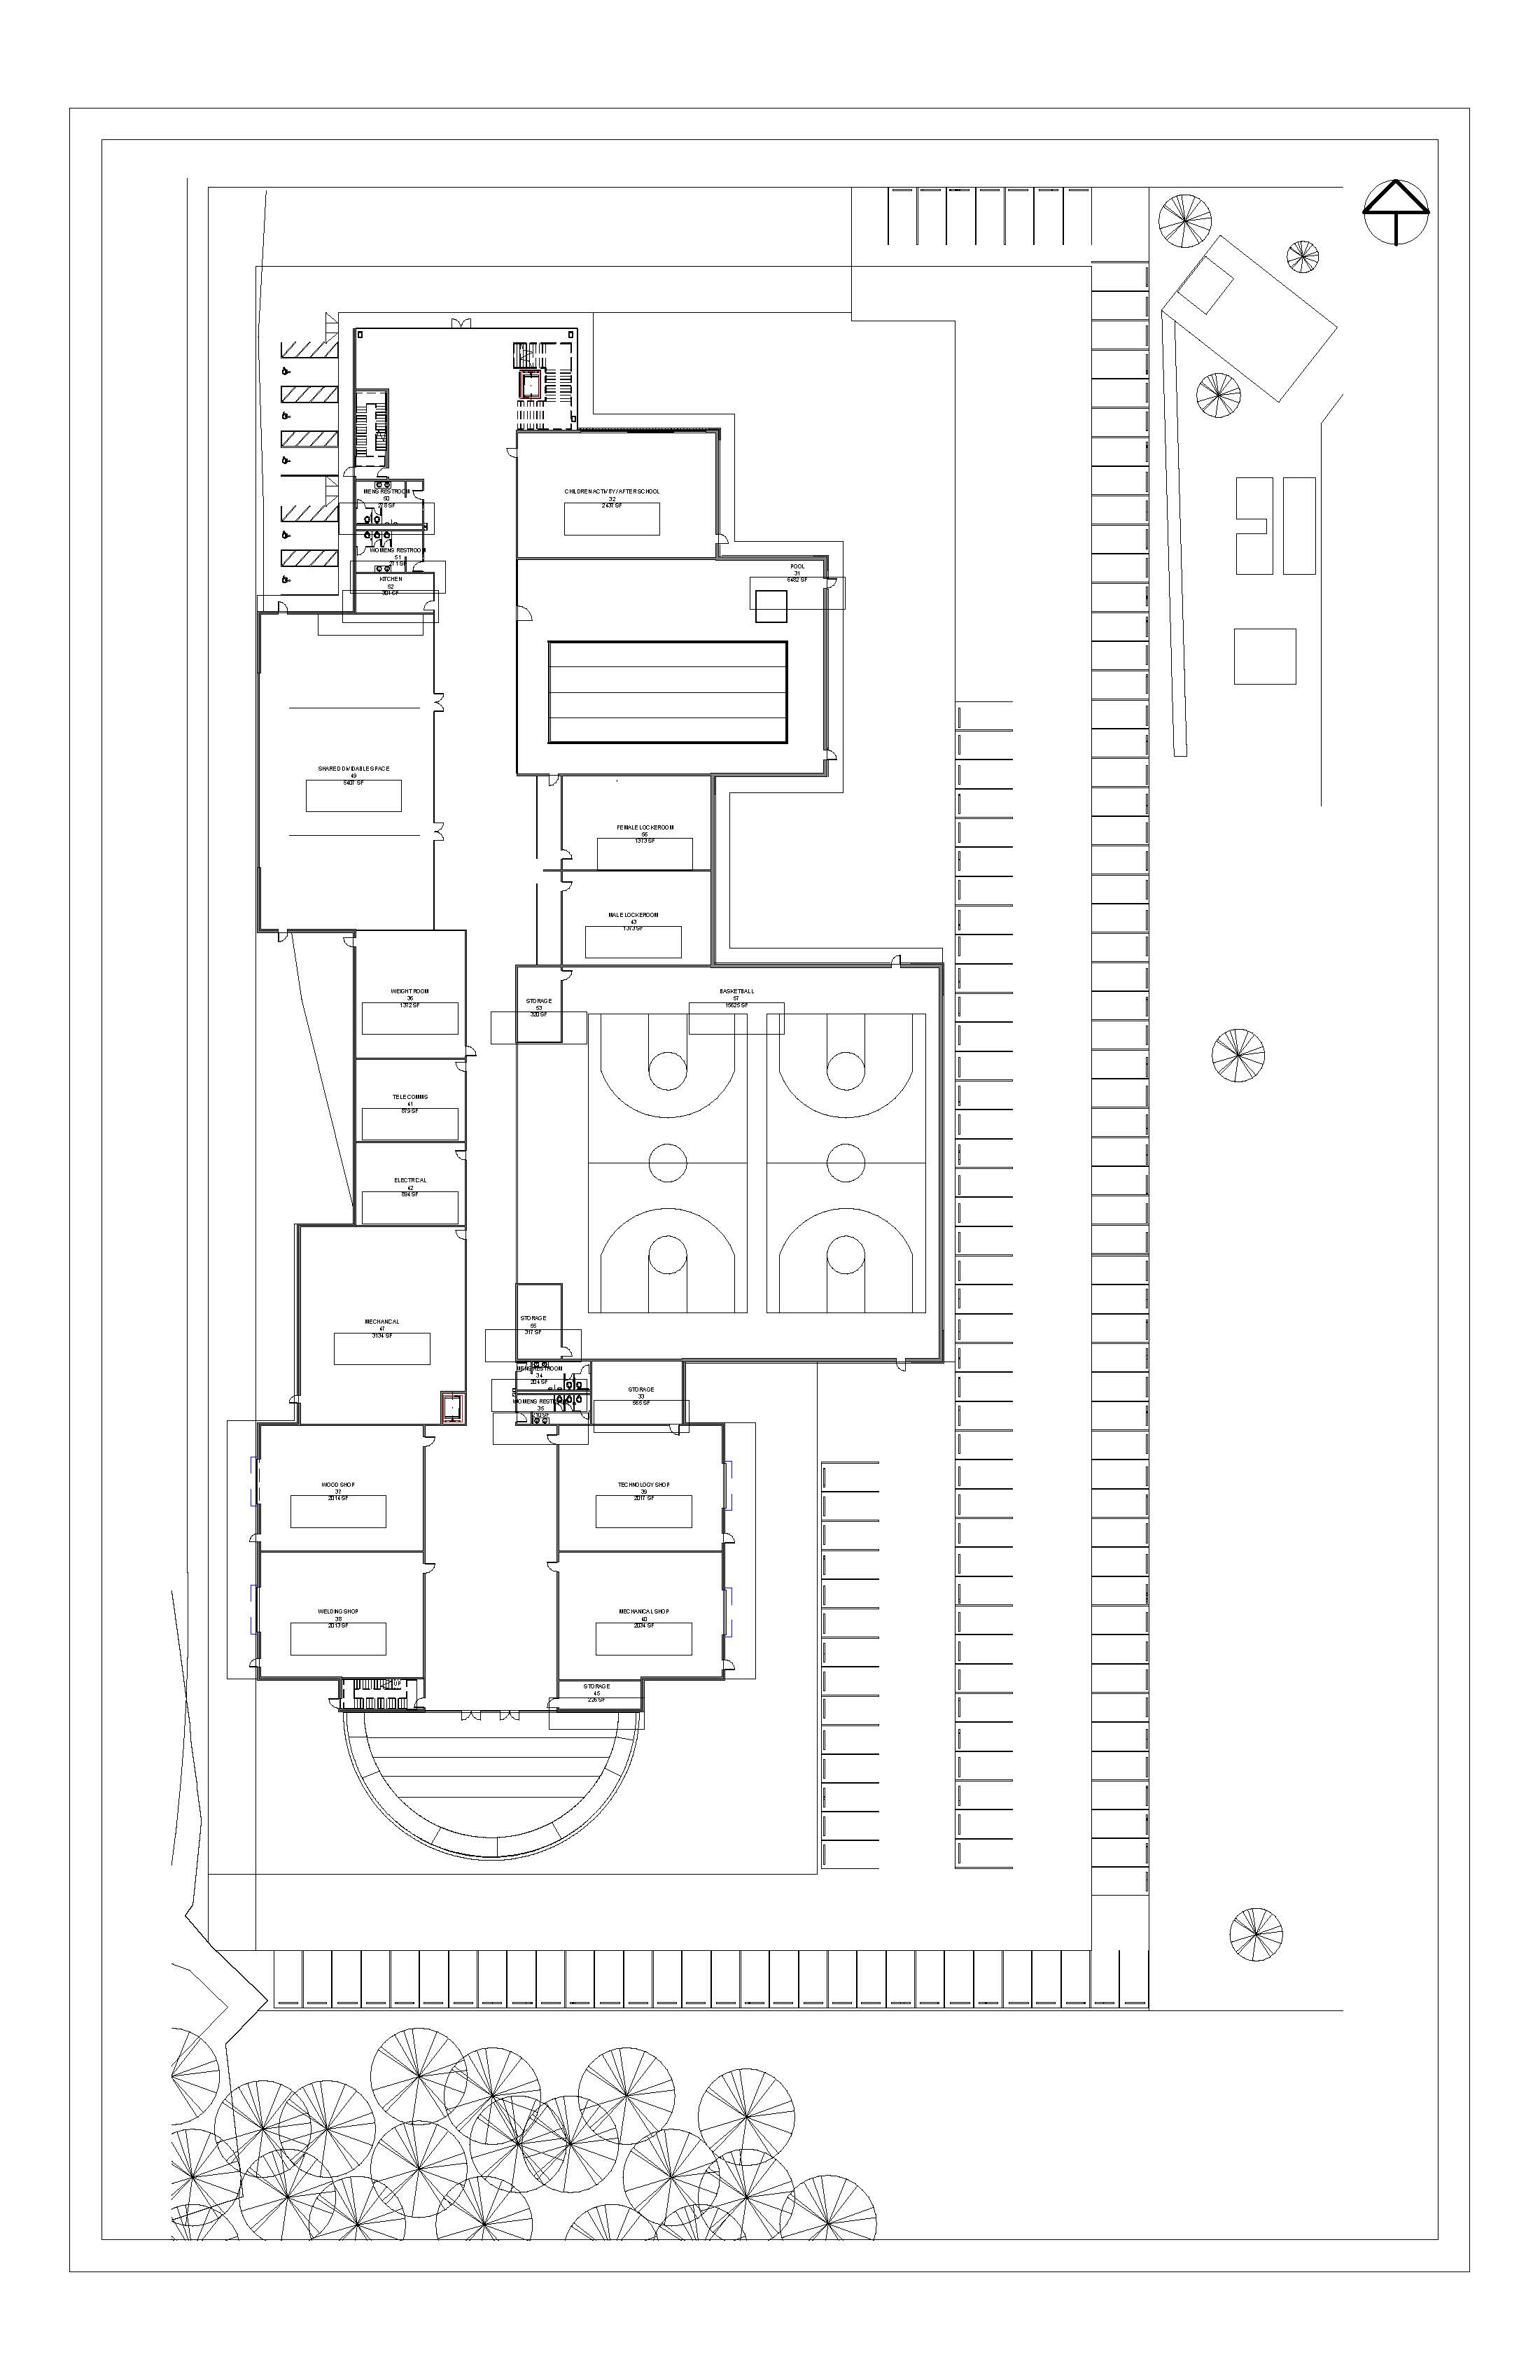 floor plans of community center